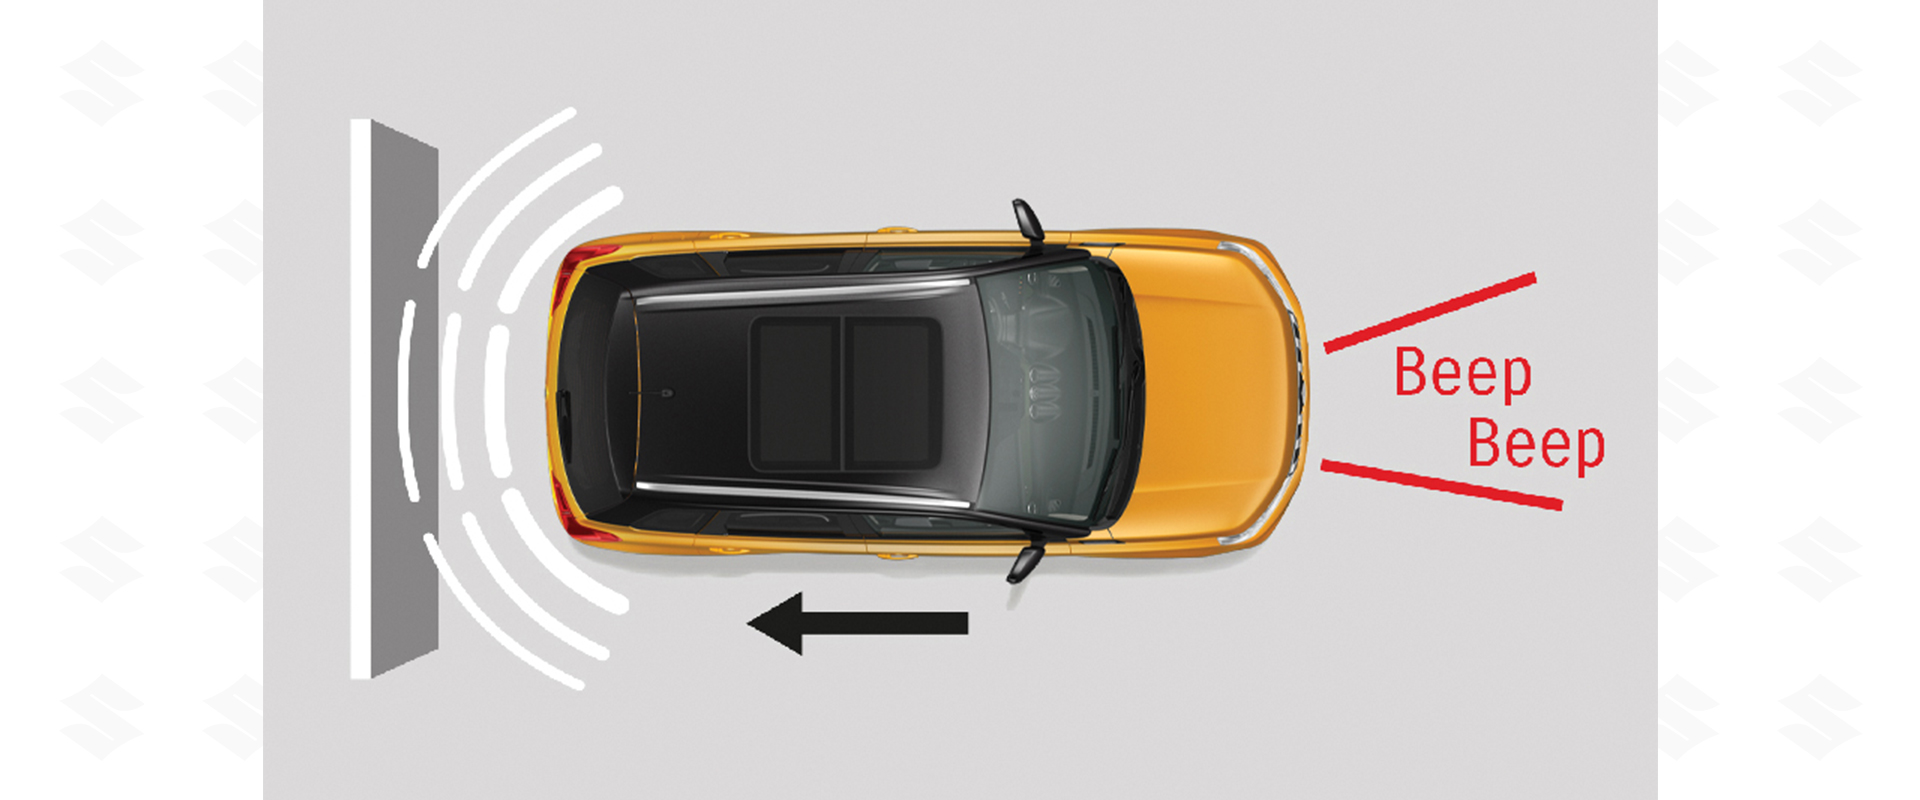 products/Automobiles/Vitara/Accessories/New Vitara Parking_sensors.jpg